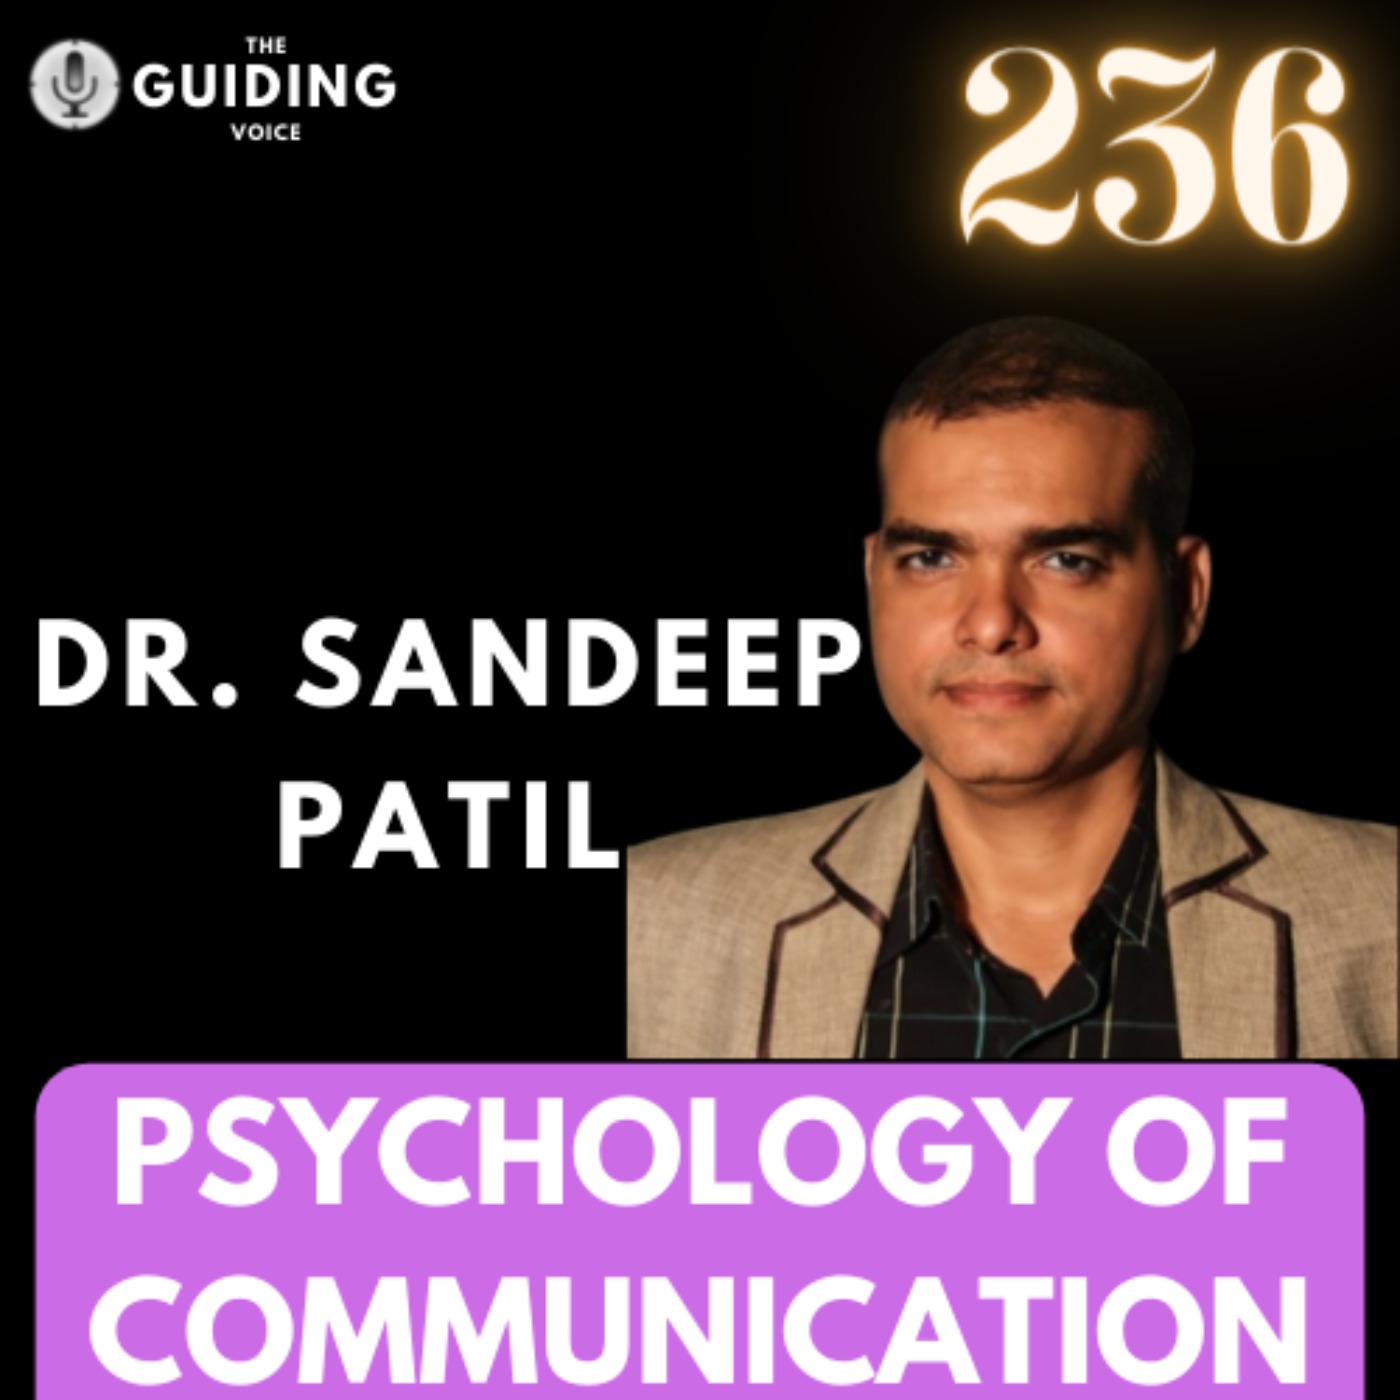 PSYCHOLOGY OF COMMUNICATION